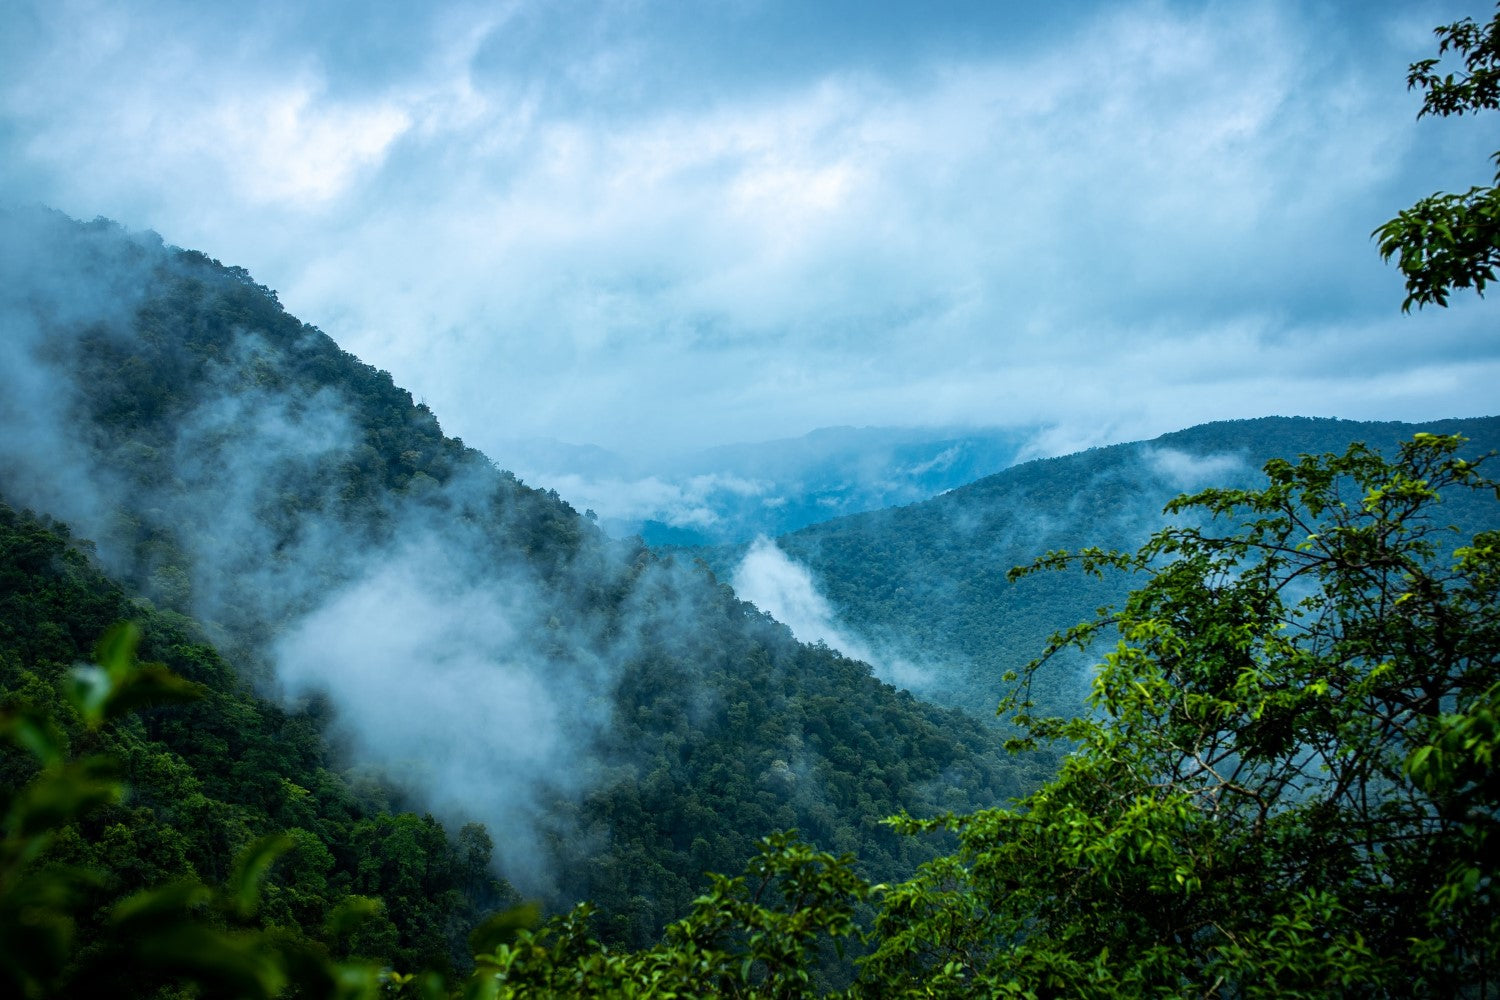 Foggy rainforest